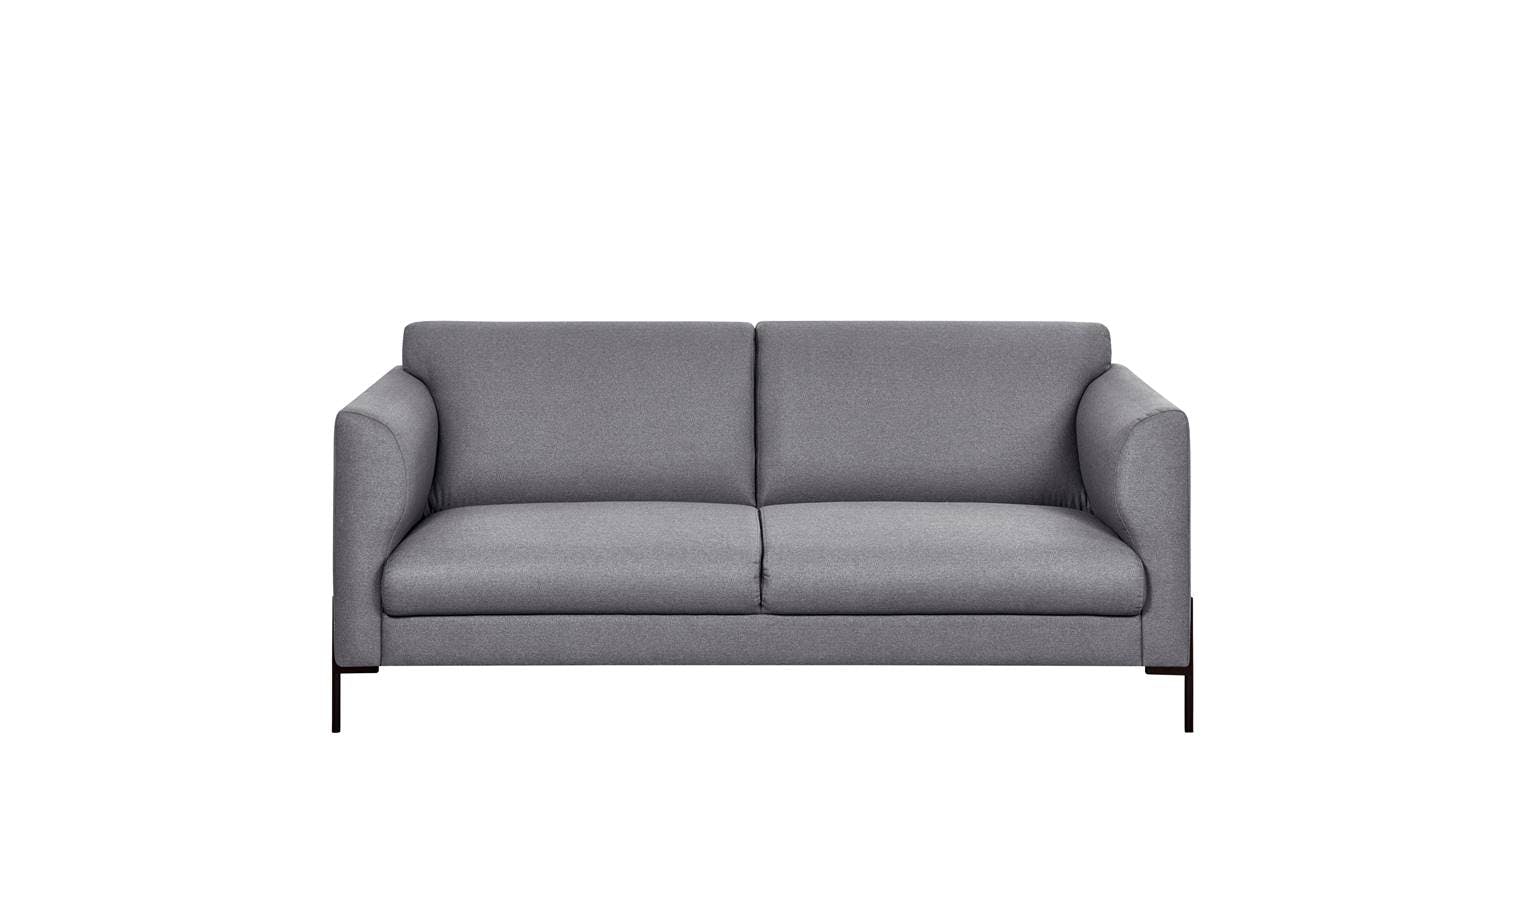 conley 86'' leather sofa